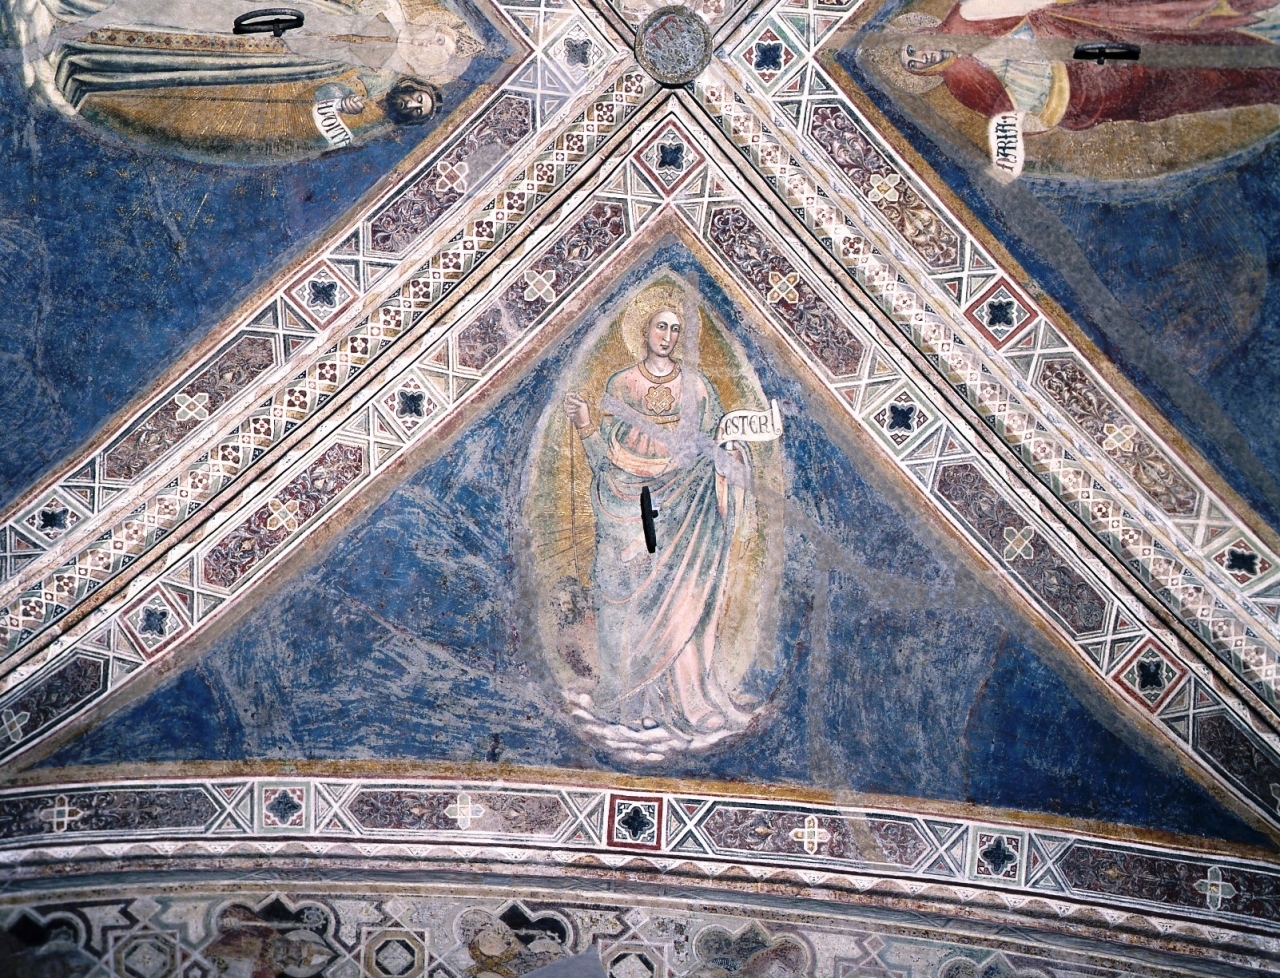 Ester (dipinto murale) di Lorenzo di Bicci (cerchia) (fine sec. XIV)